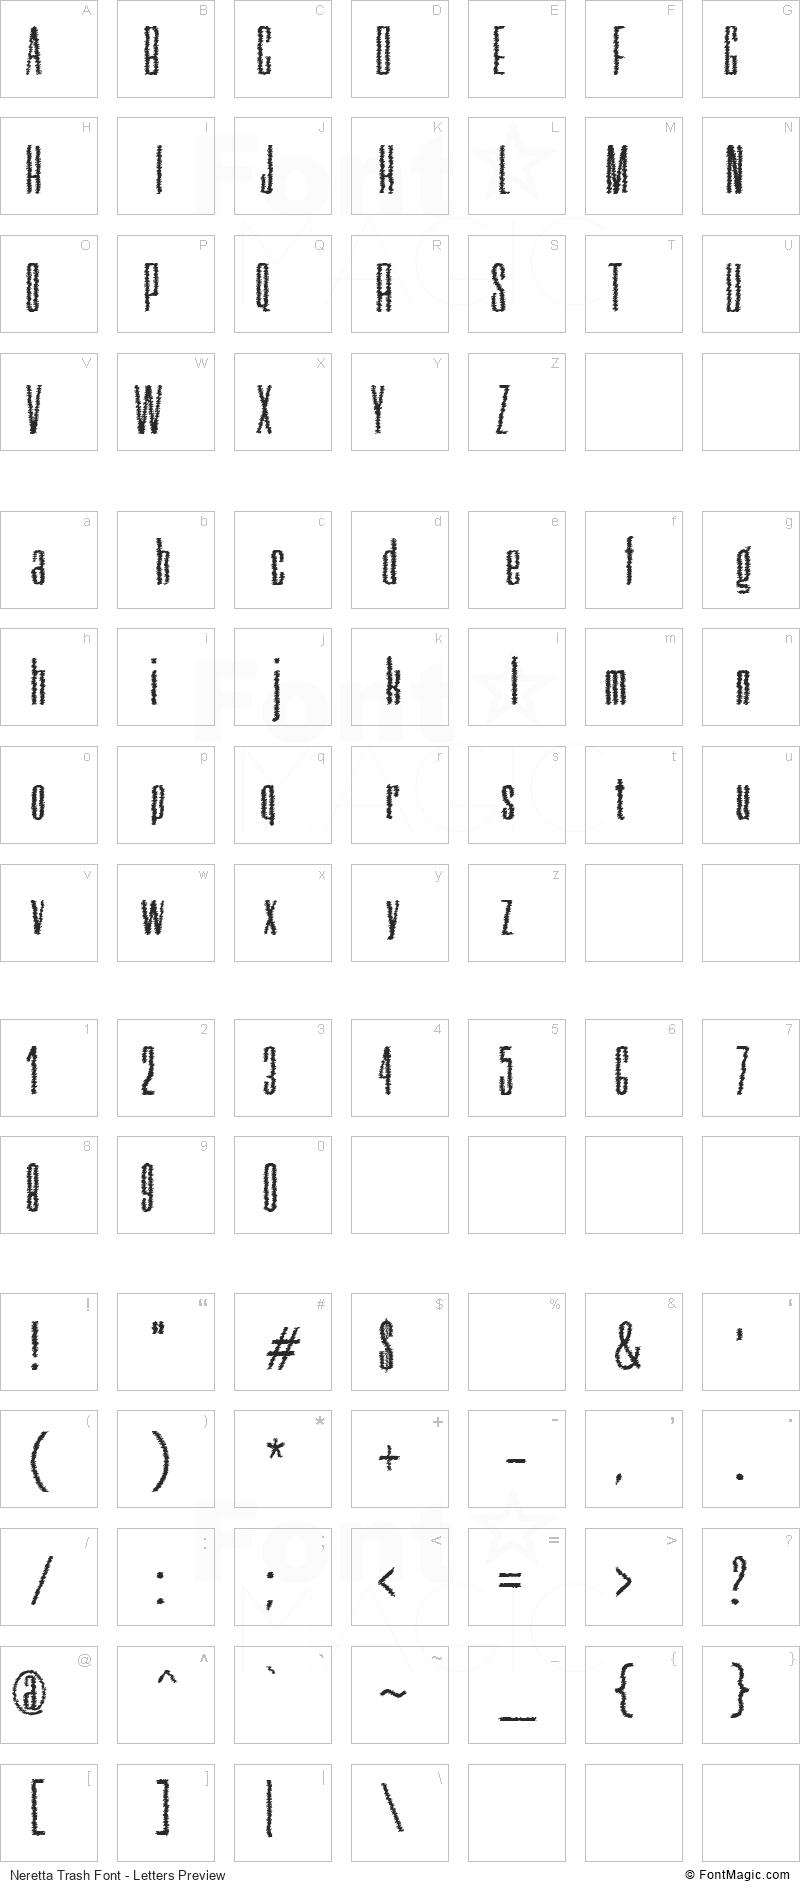 Neretta Trash Font - All Latters Preview Chart